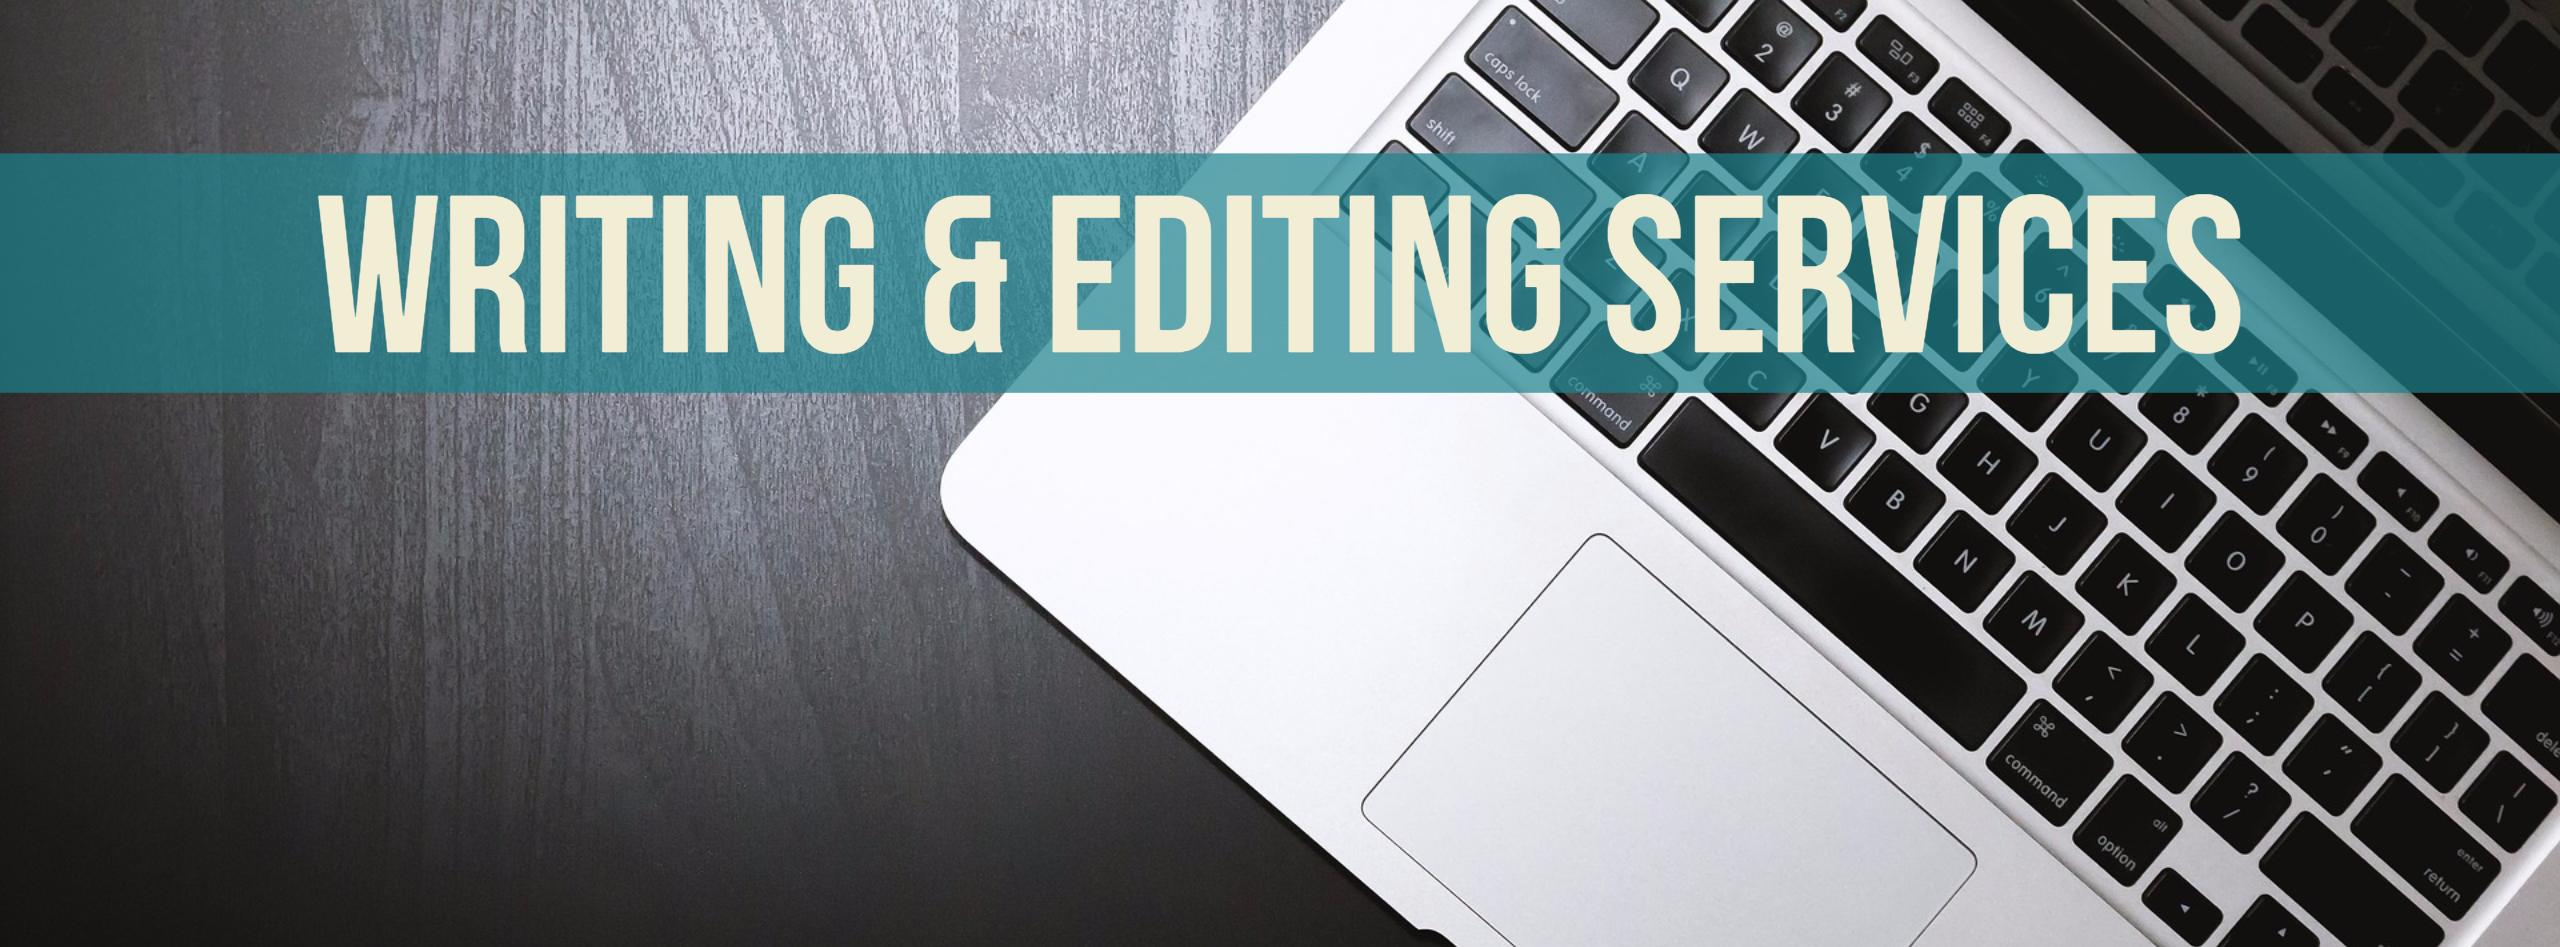 Cambridge essay editing service